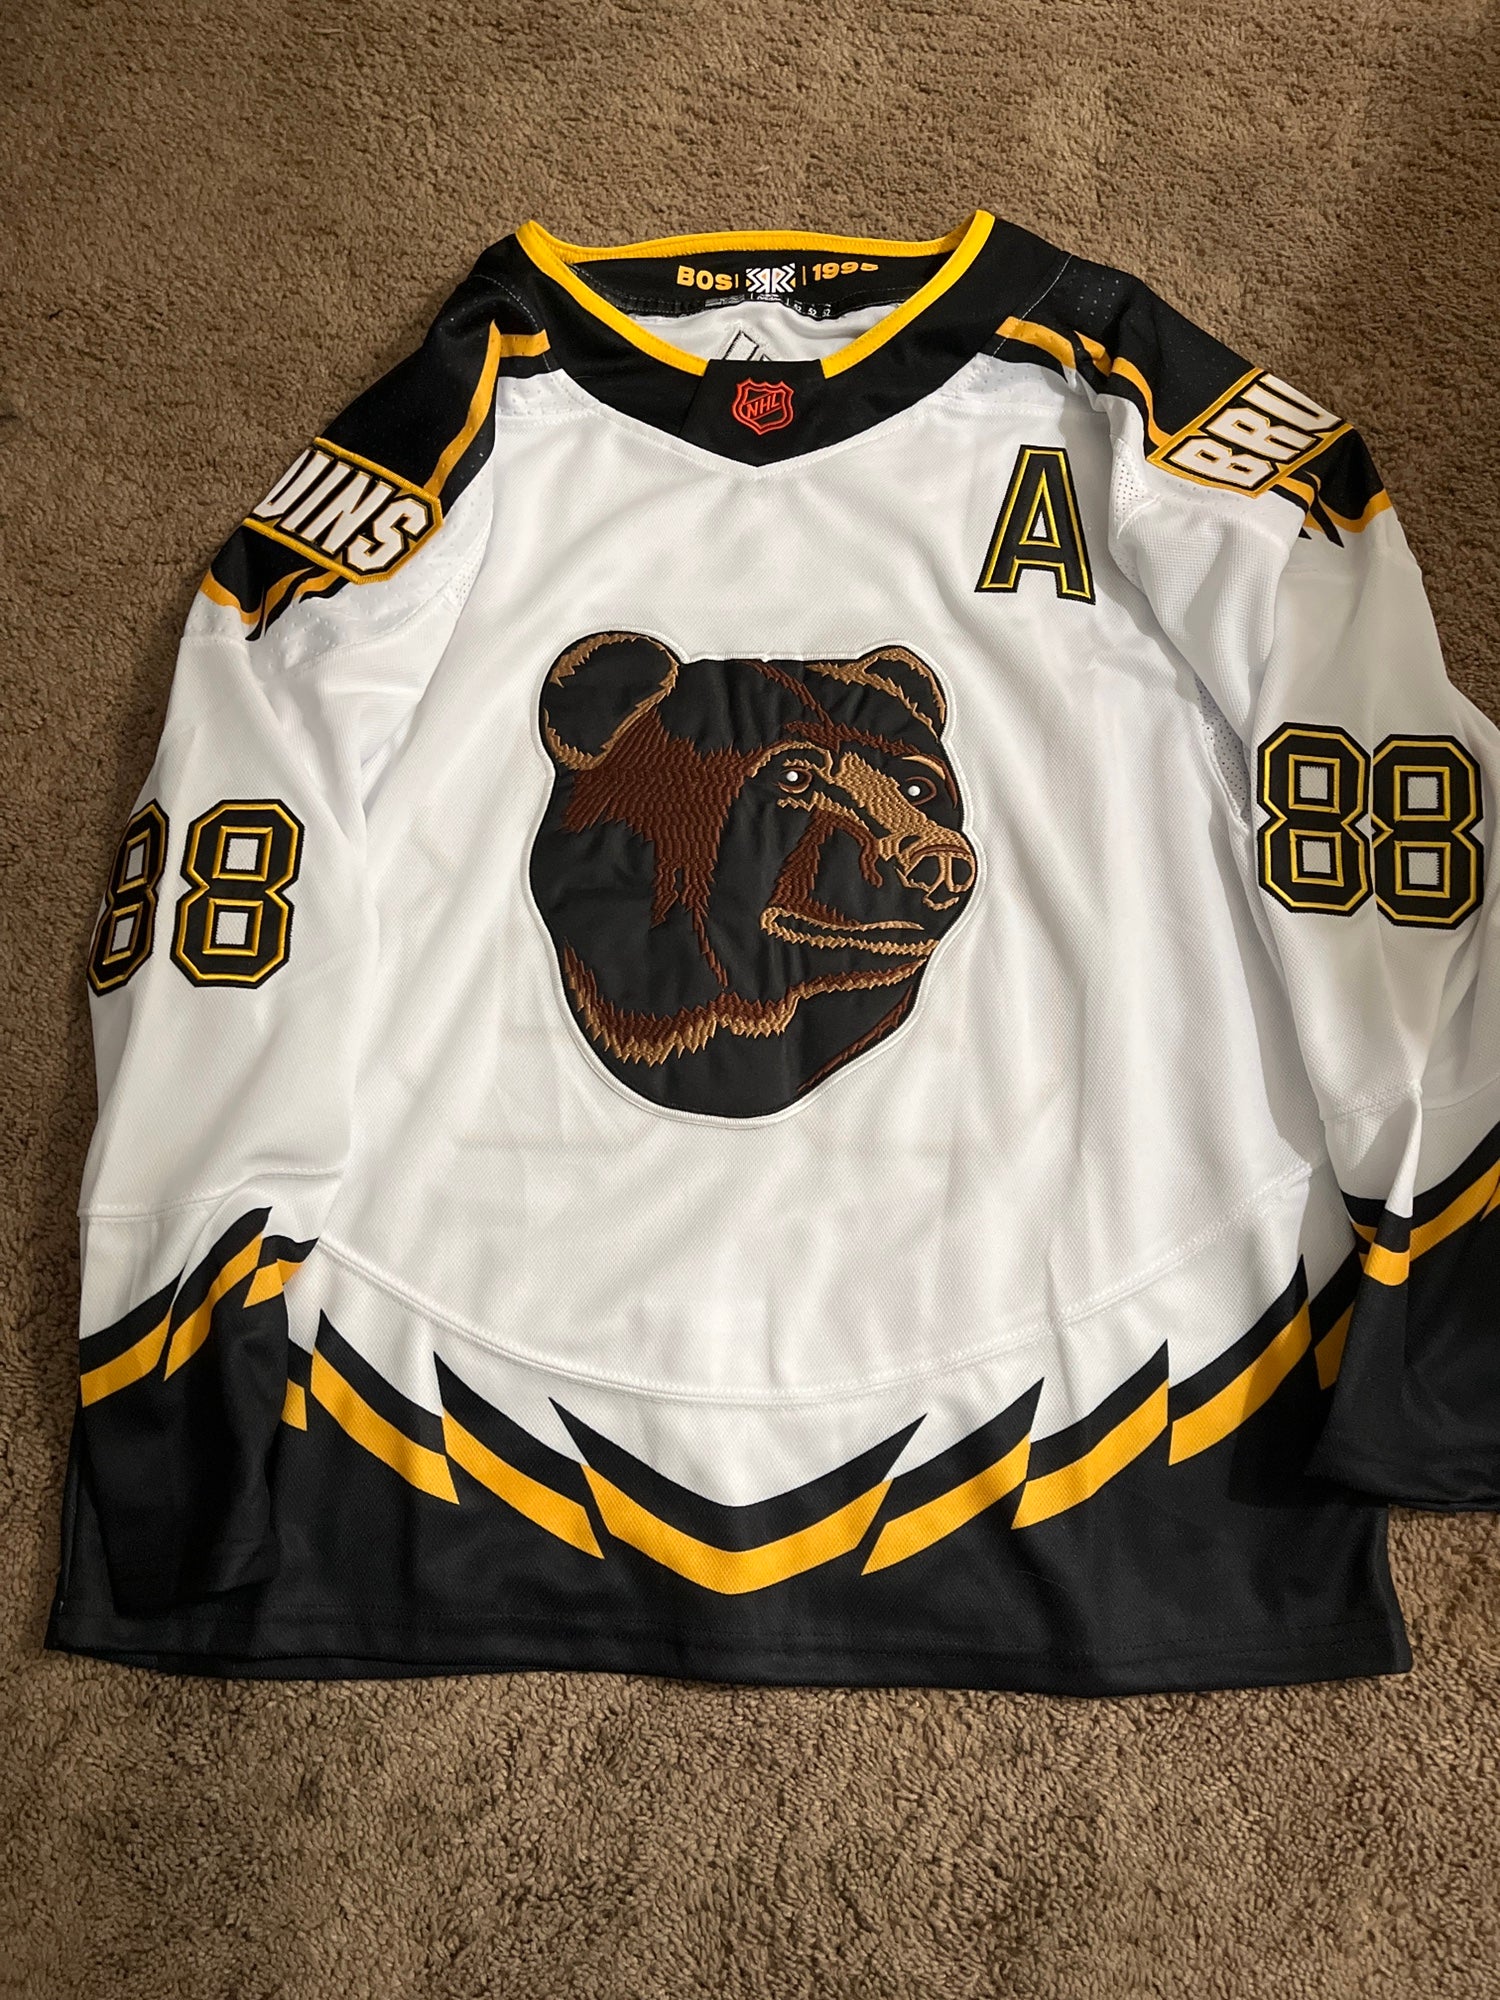 Reverse Retro Boston Bruins David Pastrnak jersey